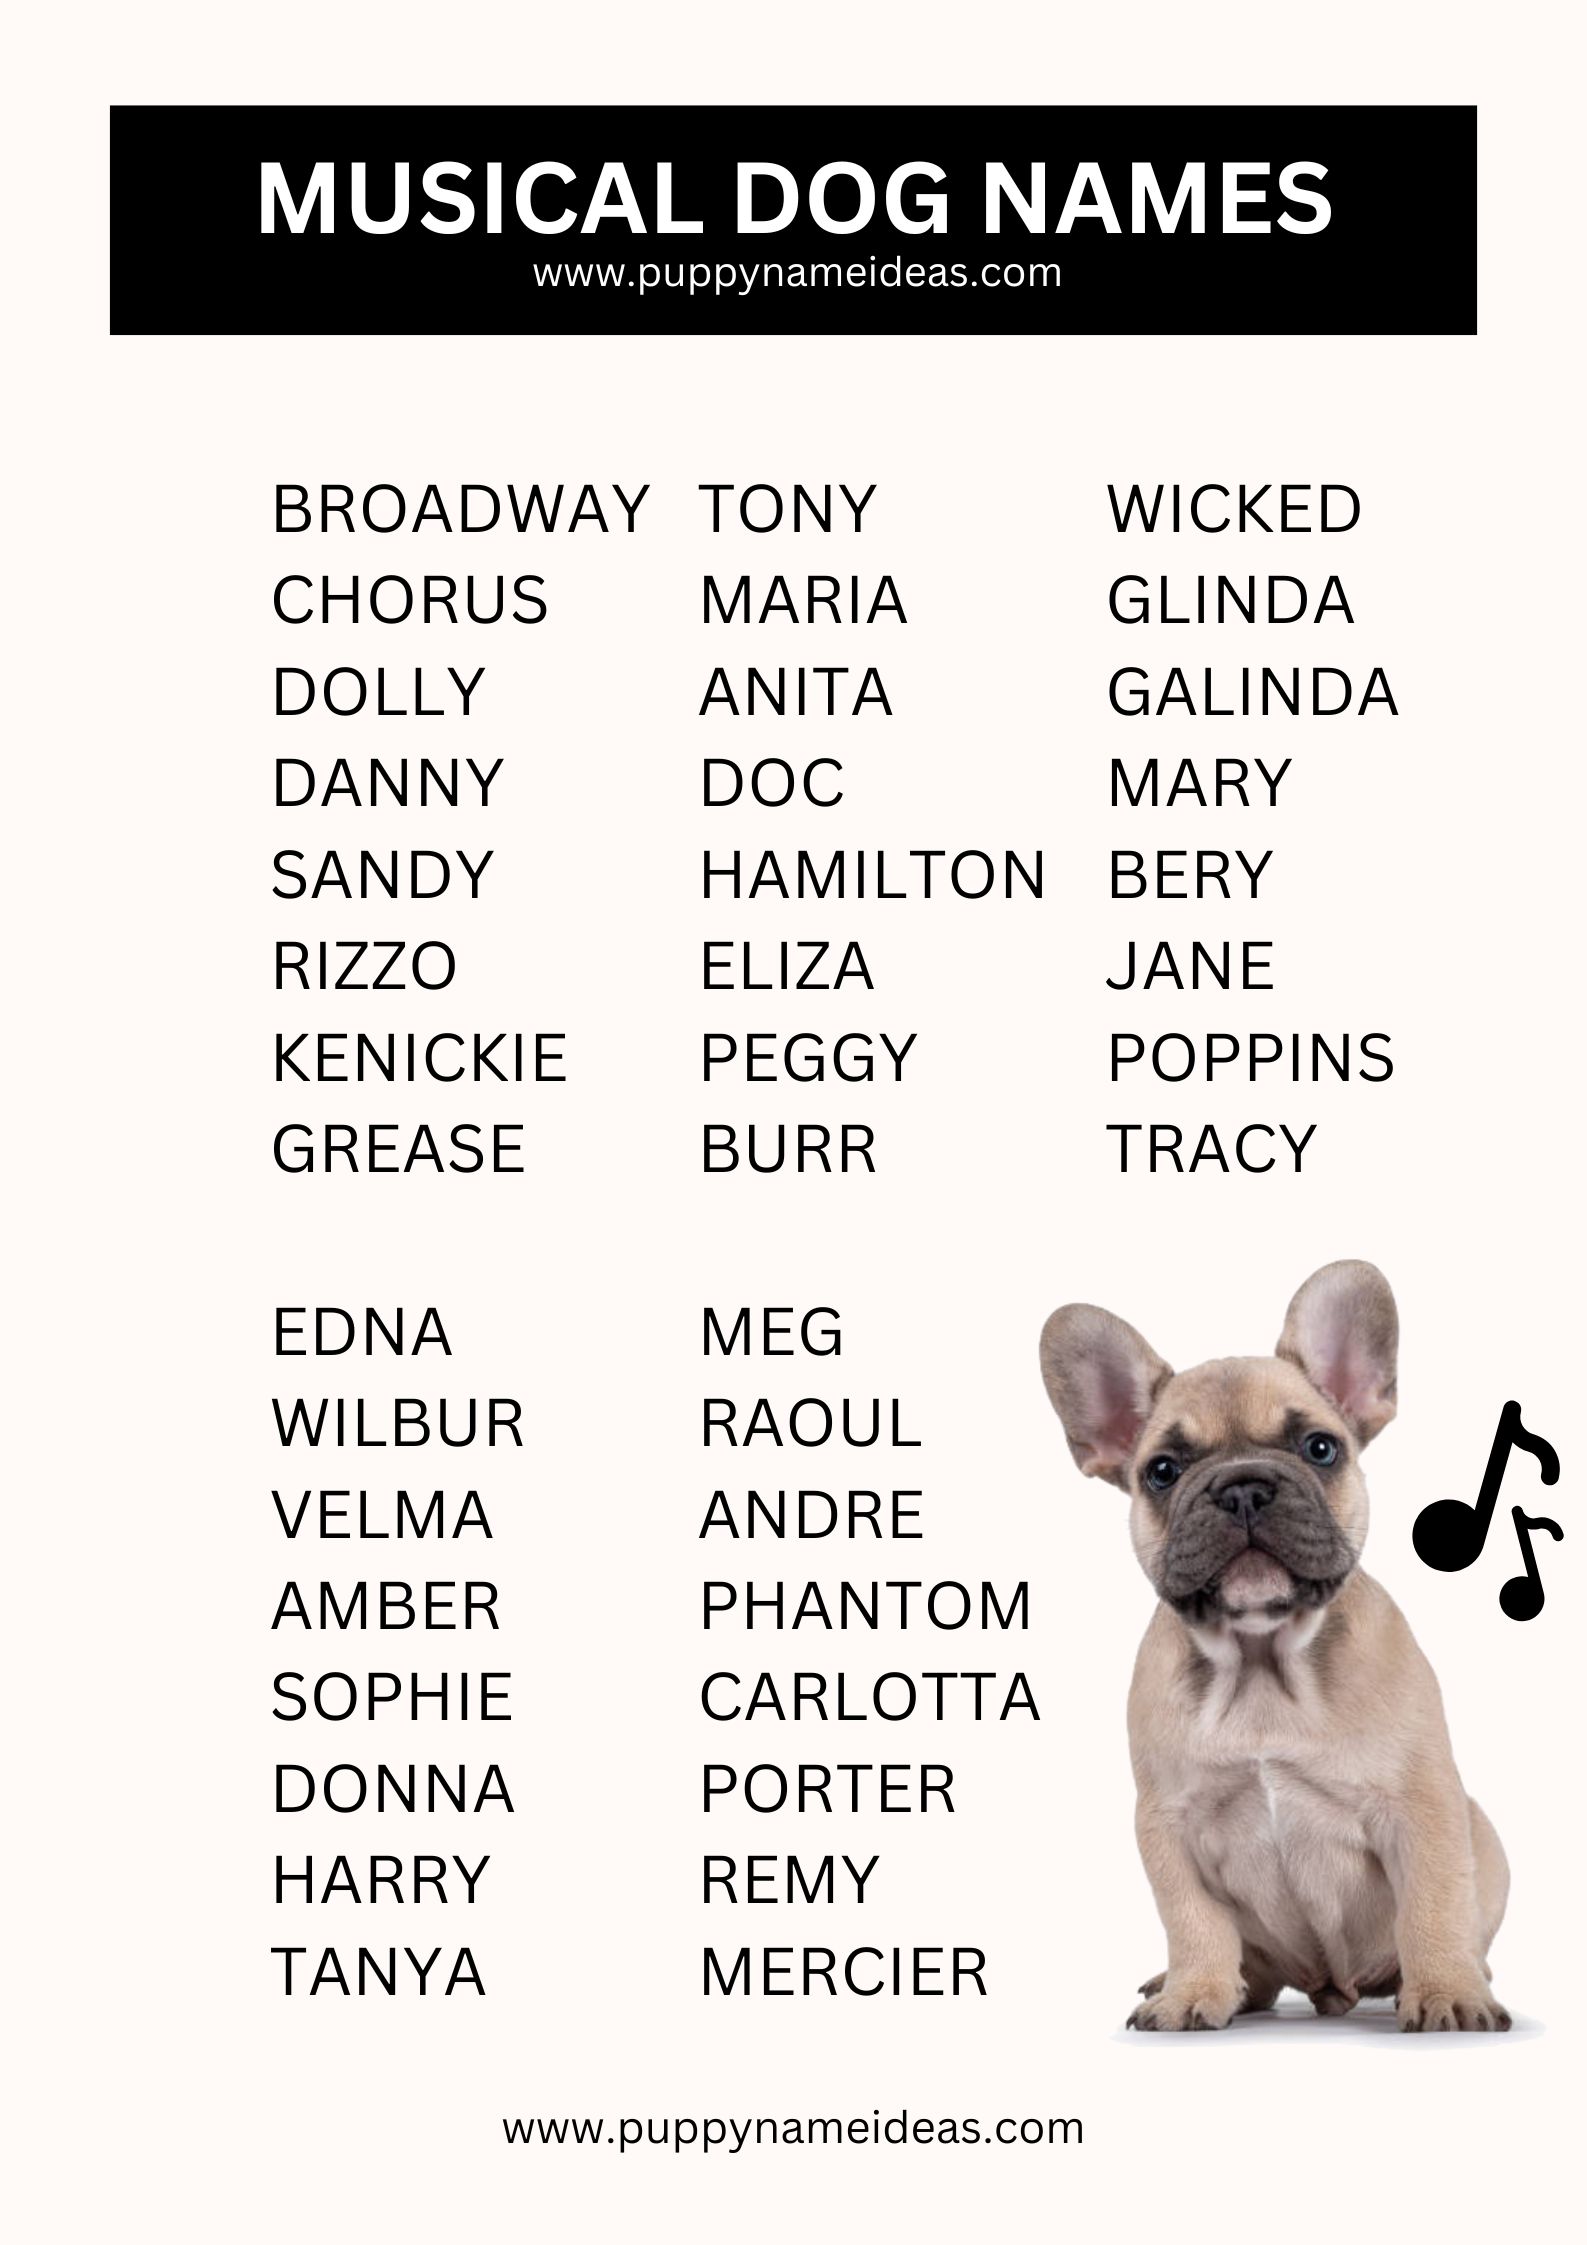 List Of Musical Dog Names